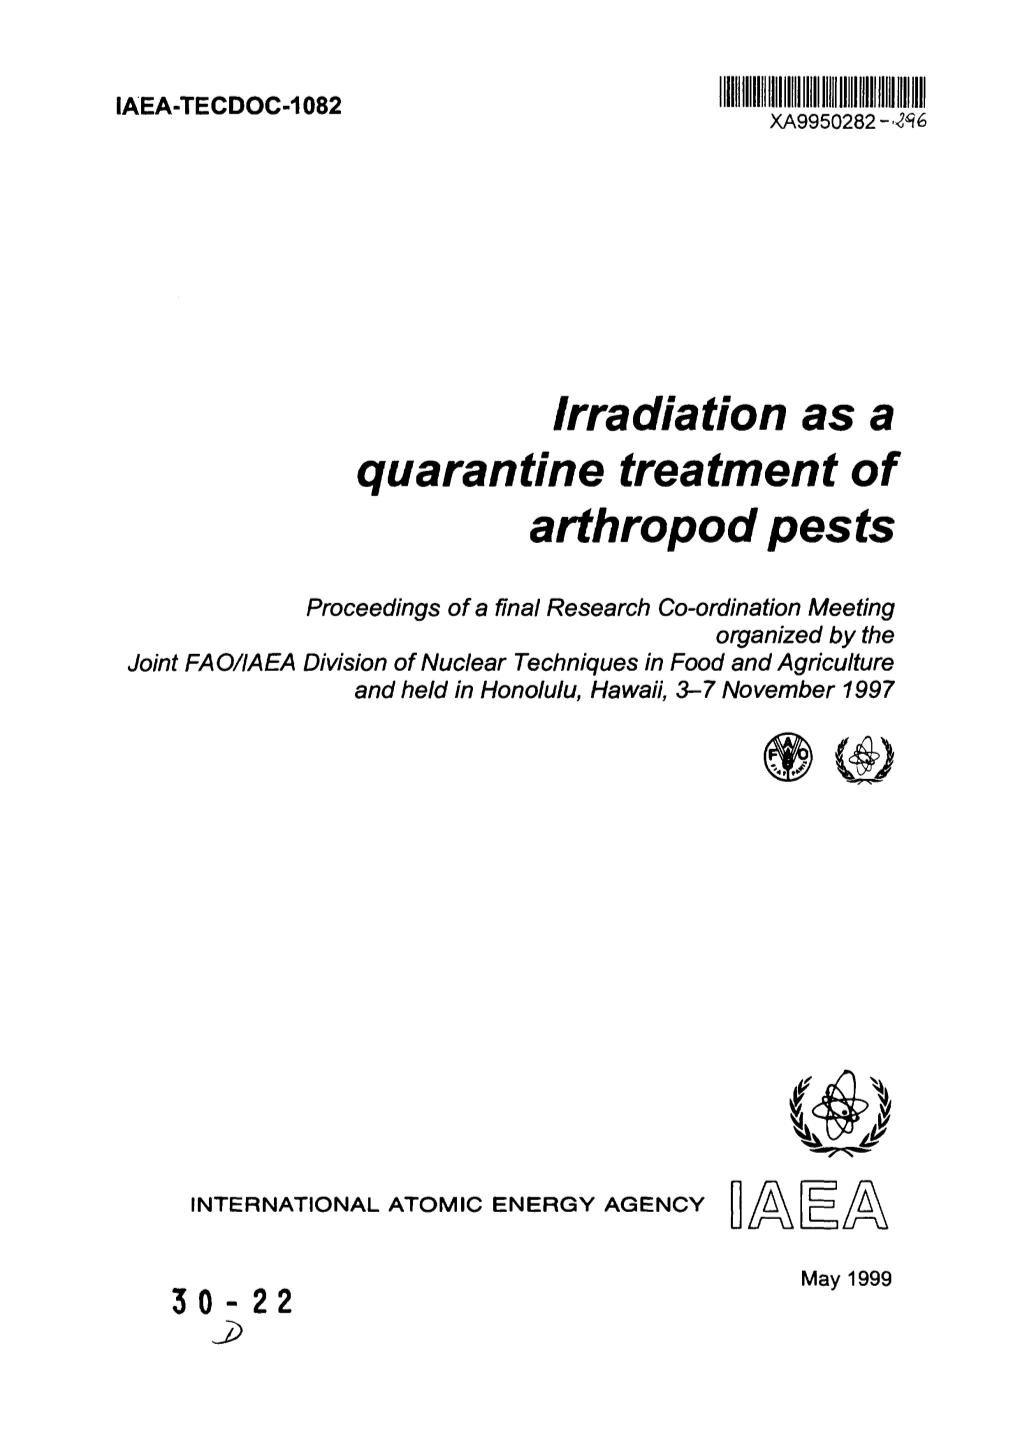 Irradiation As a Quarantine Treatment of Arthropod Pests